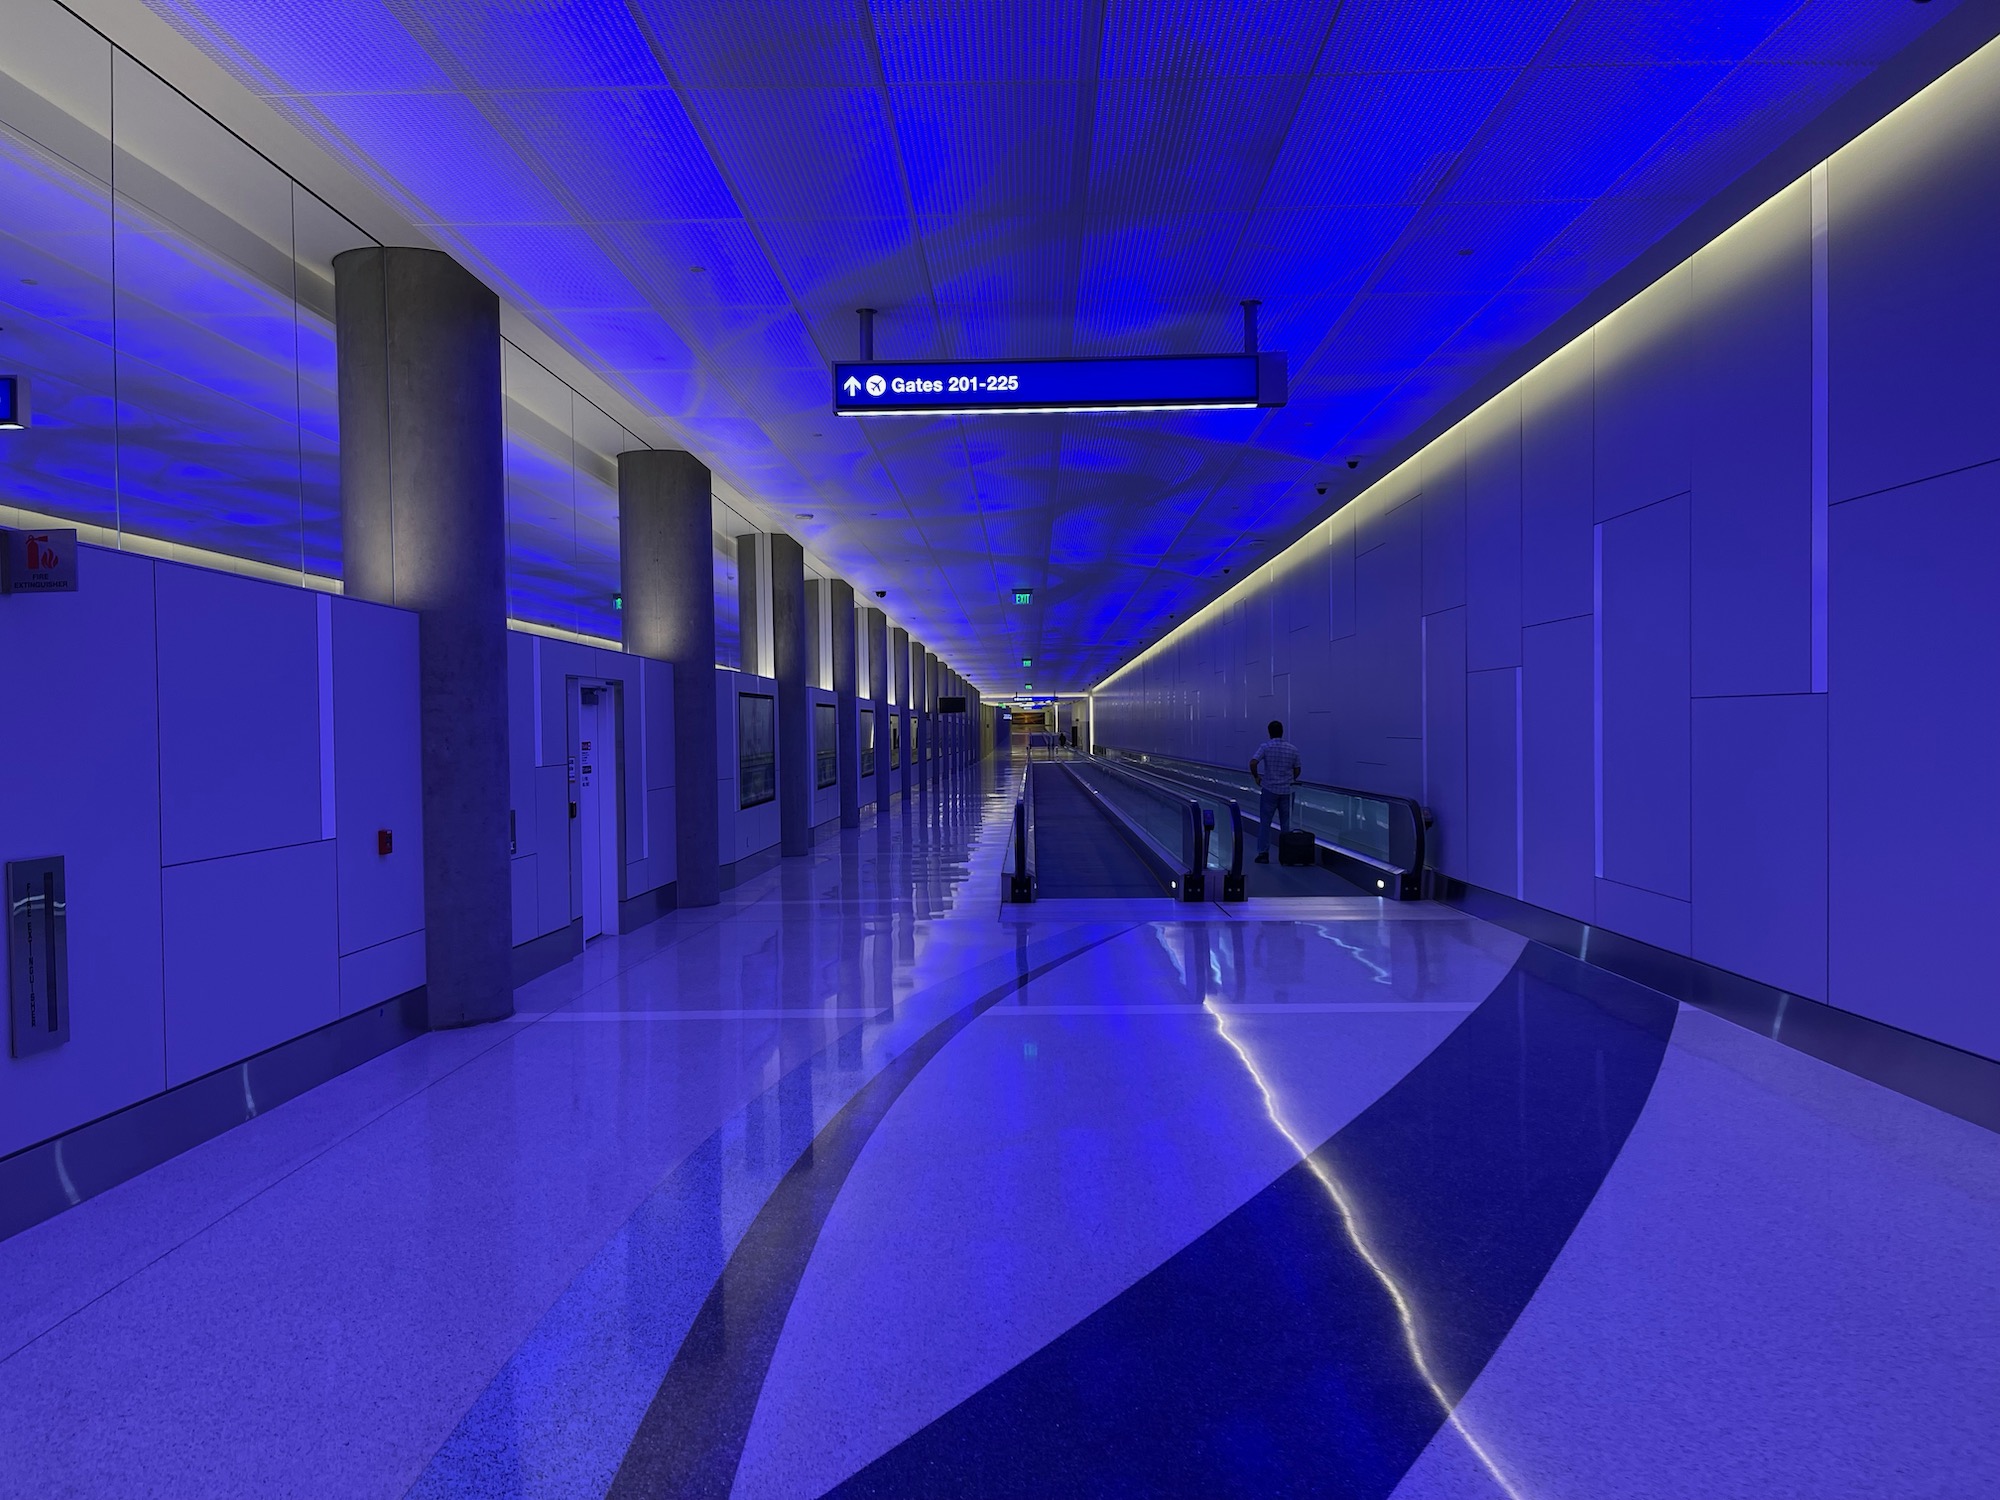 a long hallway with a blue light